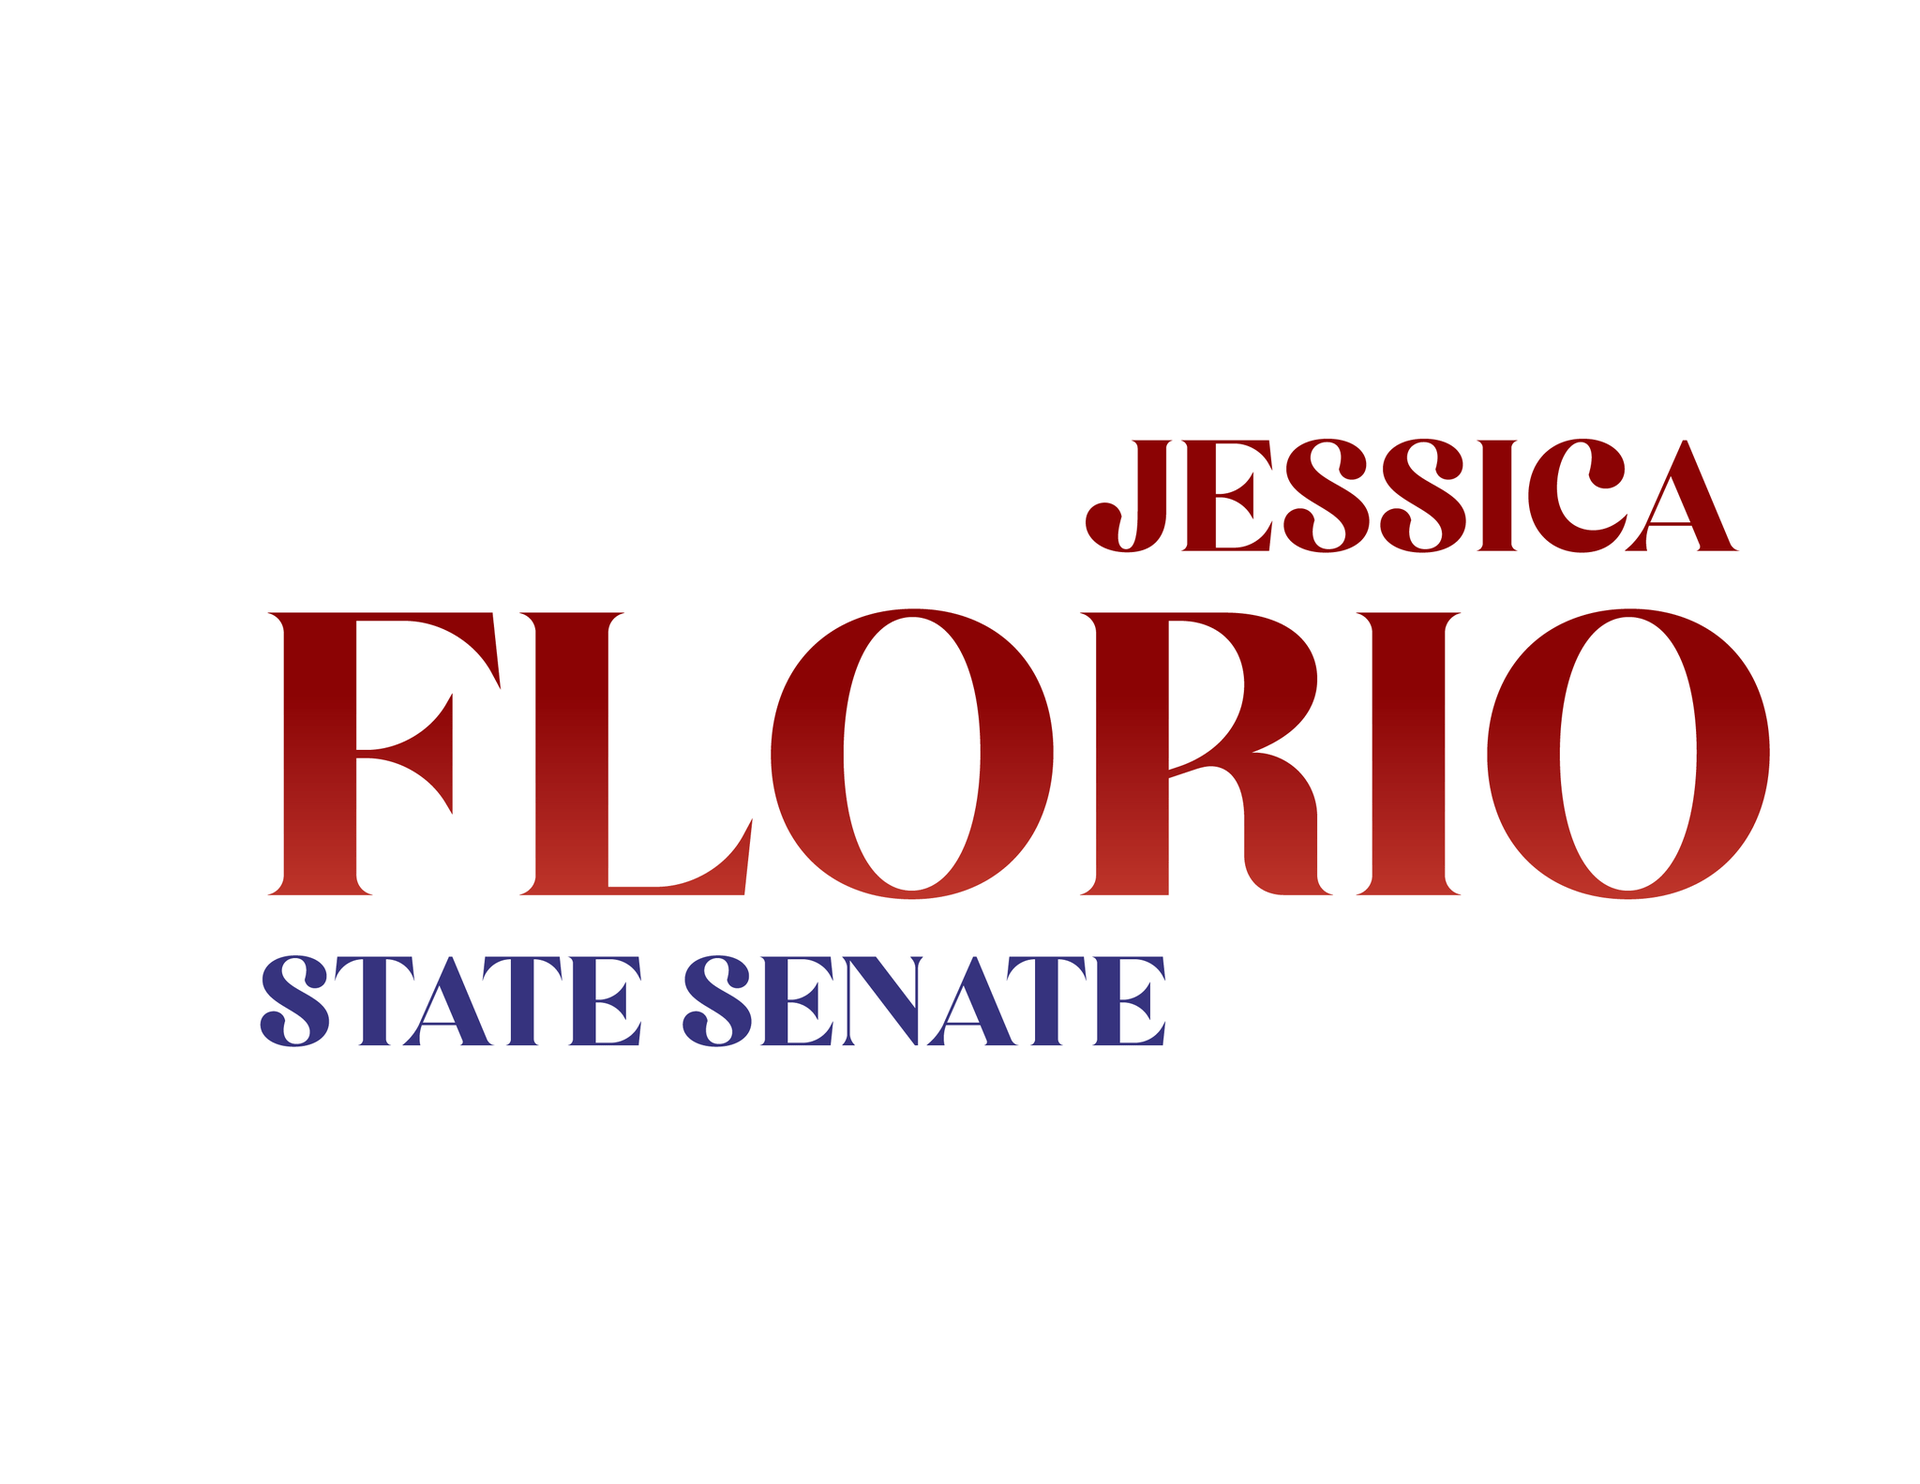 Jessica florio state senate